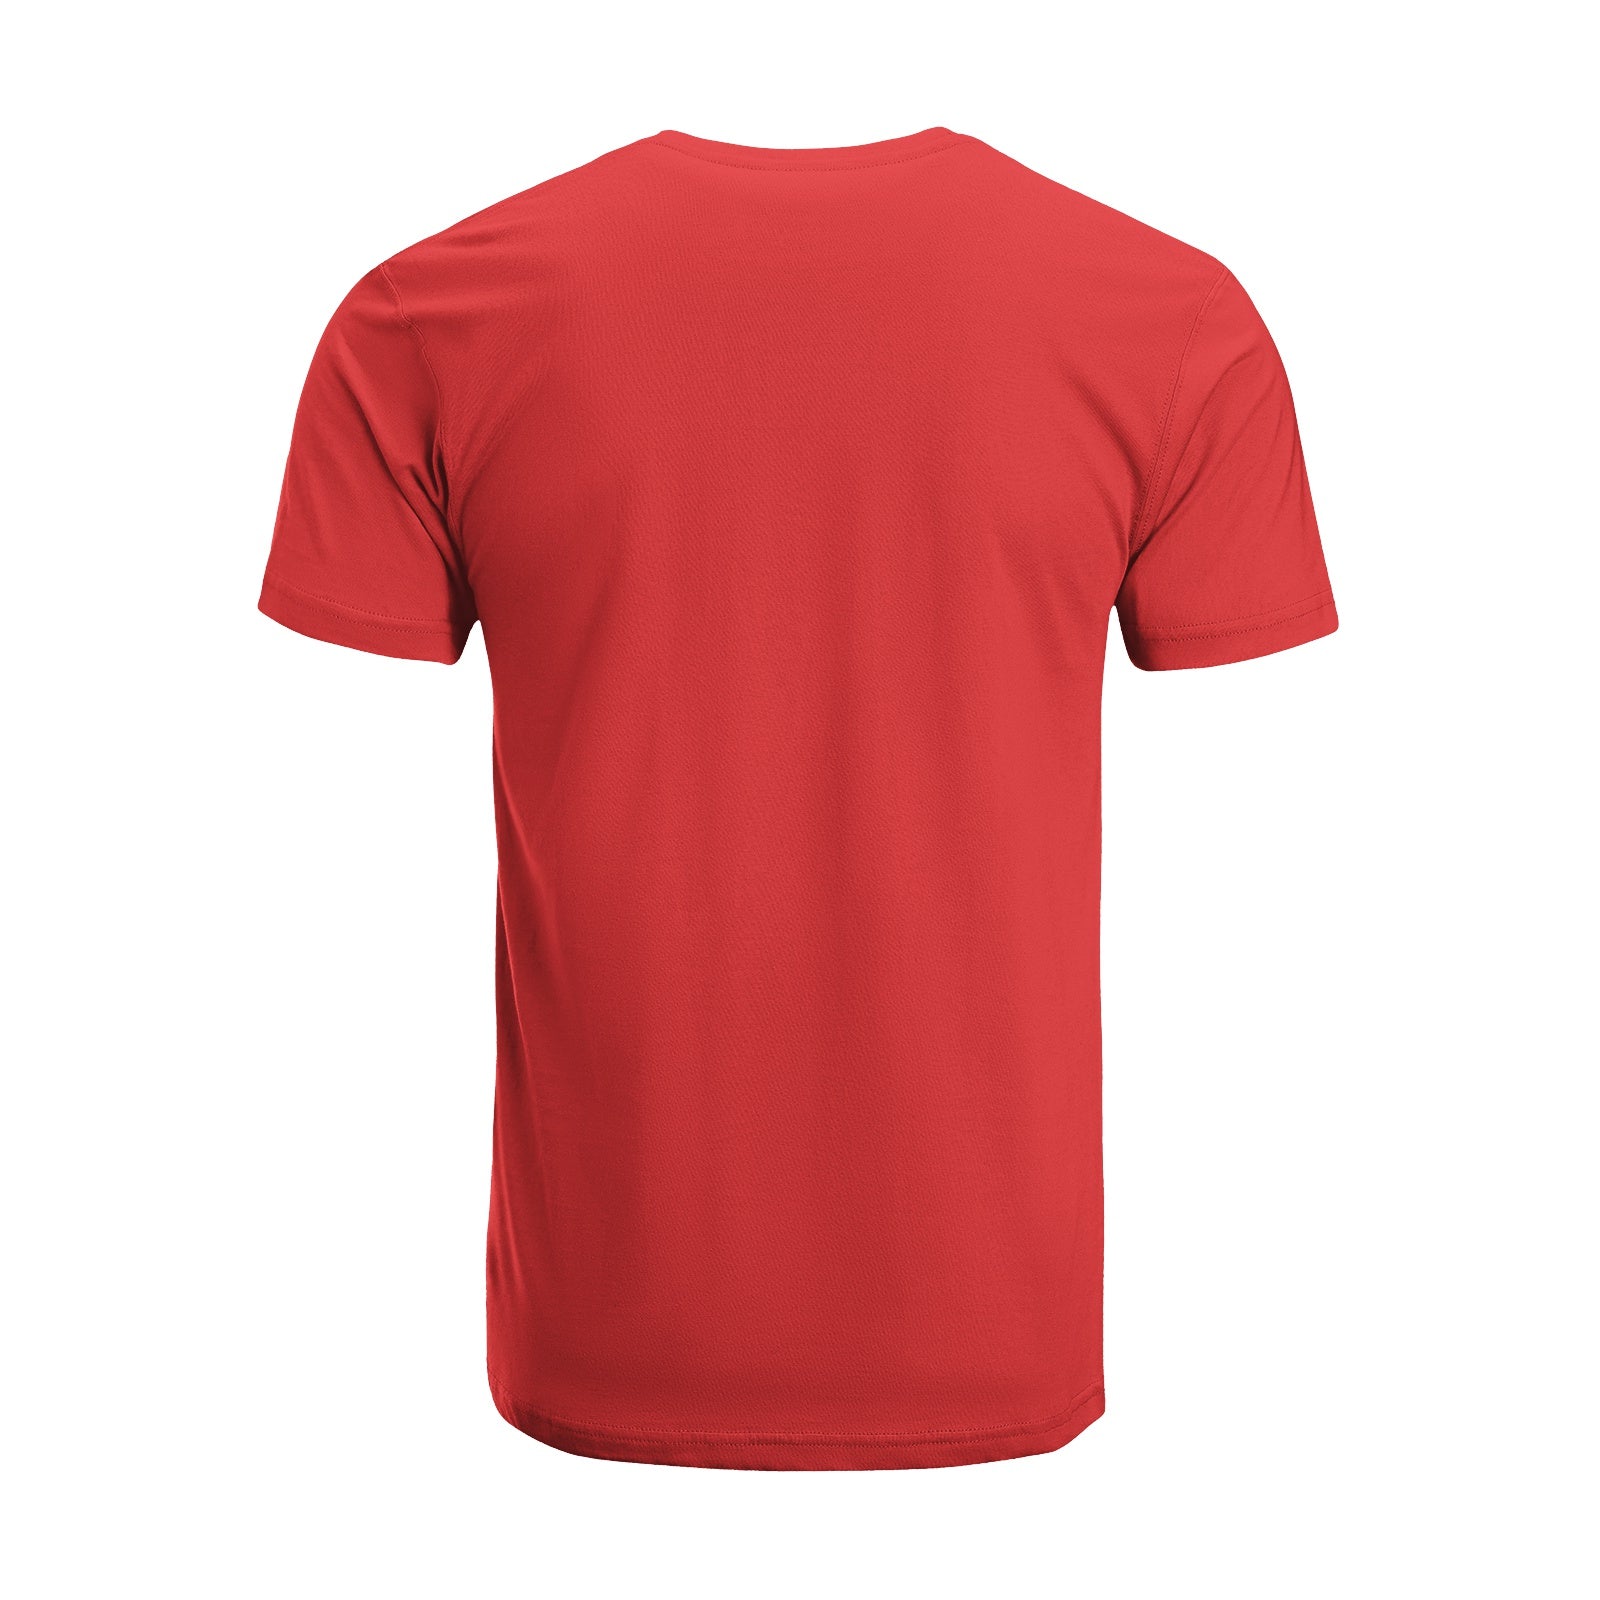 Unisex Short Sleeve Crew Neck Cotton Jersey T-Shirt Gym No. 44 - Tara-Outfits.com